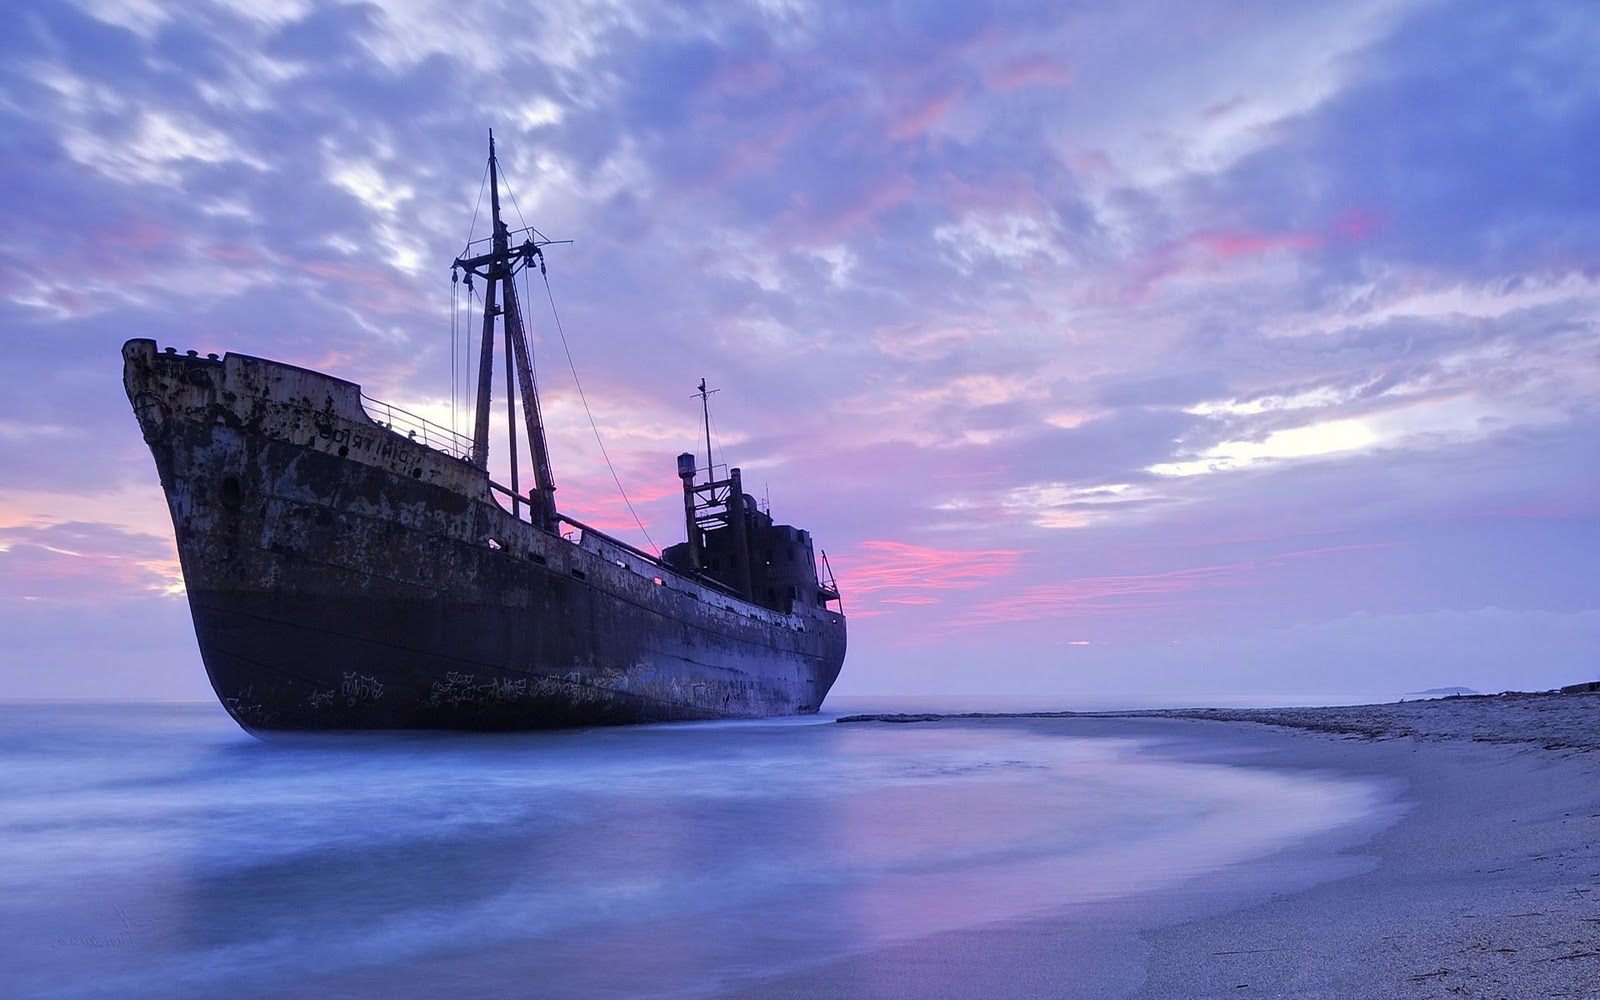 ship wallpaper hd,shipwreck,boat,vehicle,sky,ocean